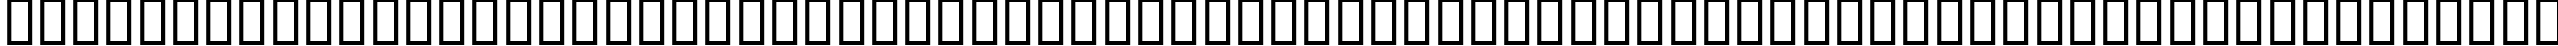 Пример написания английского алфавита шрифтом WBX Scrawl